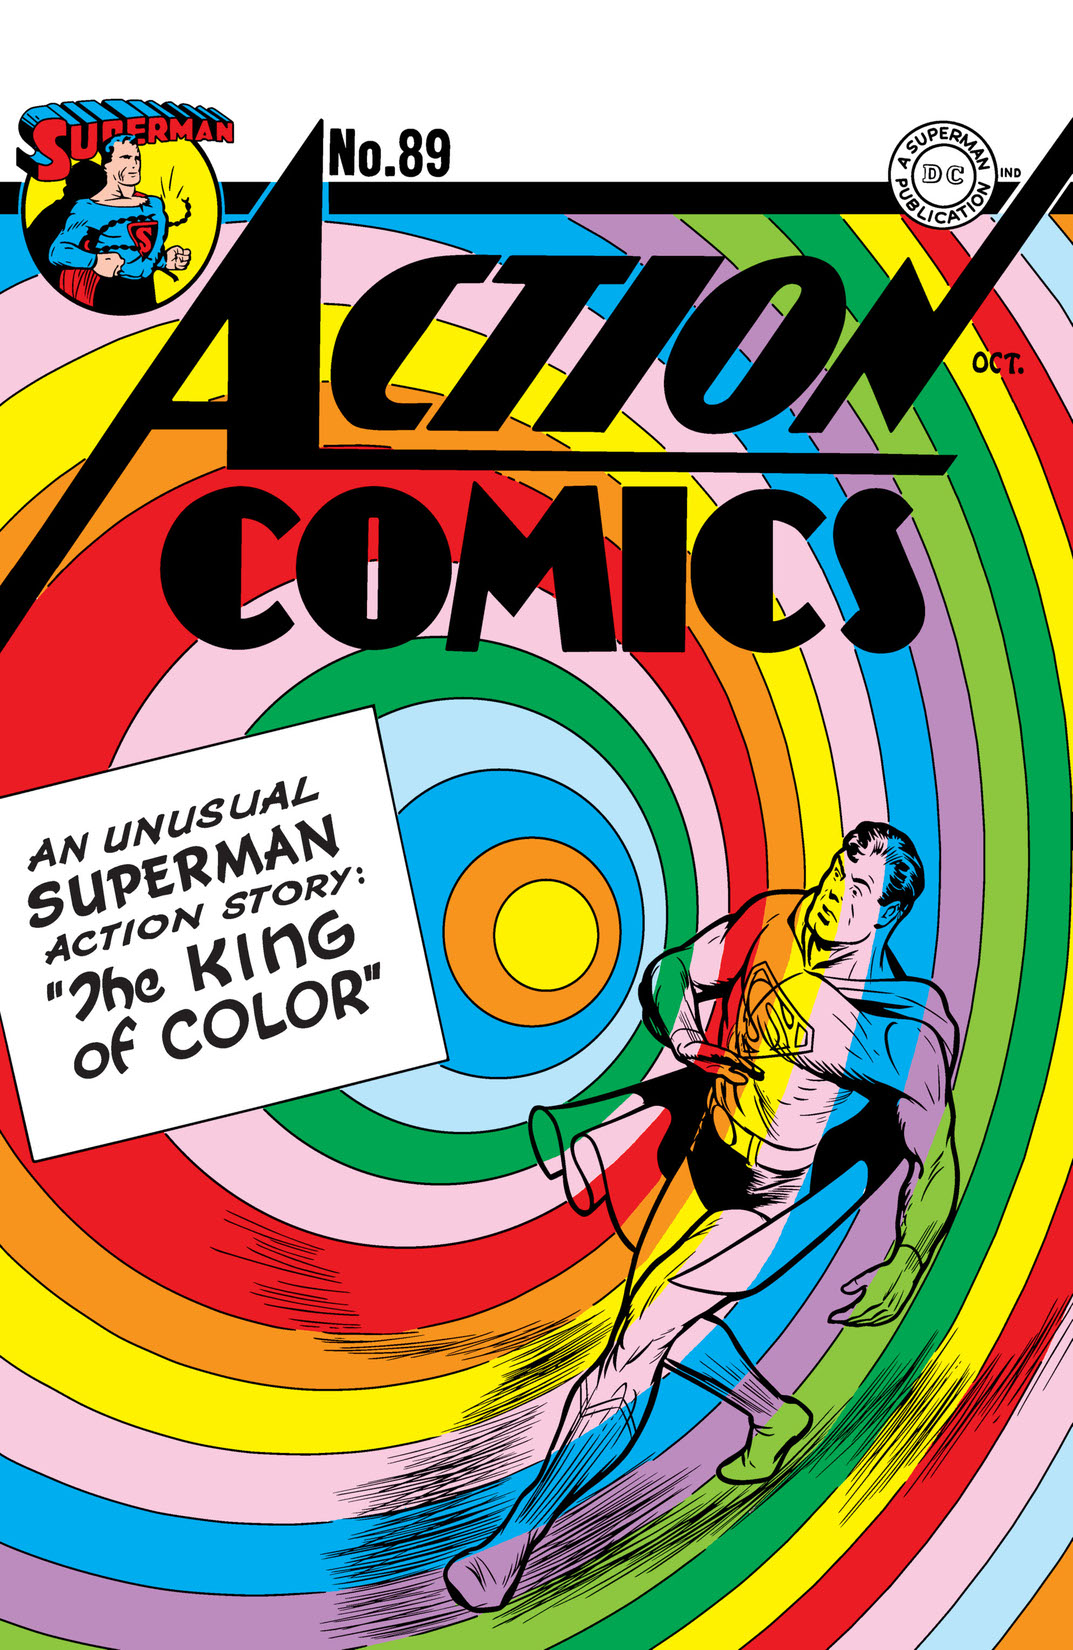 Action Comics (1938-) #89 preview images